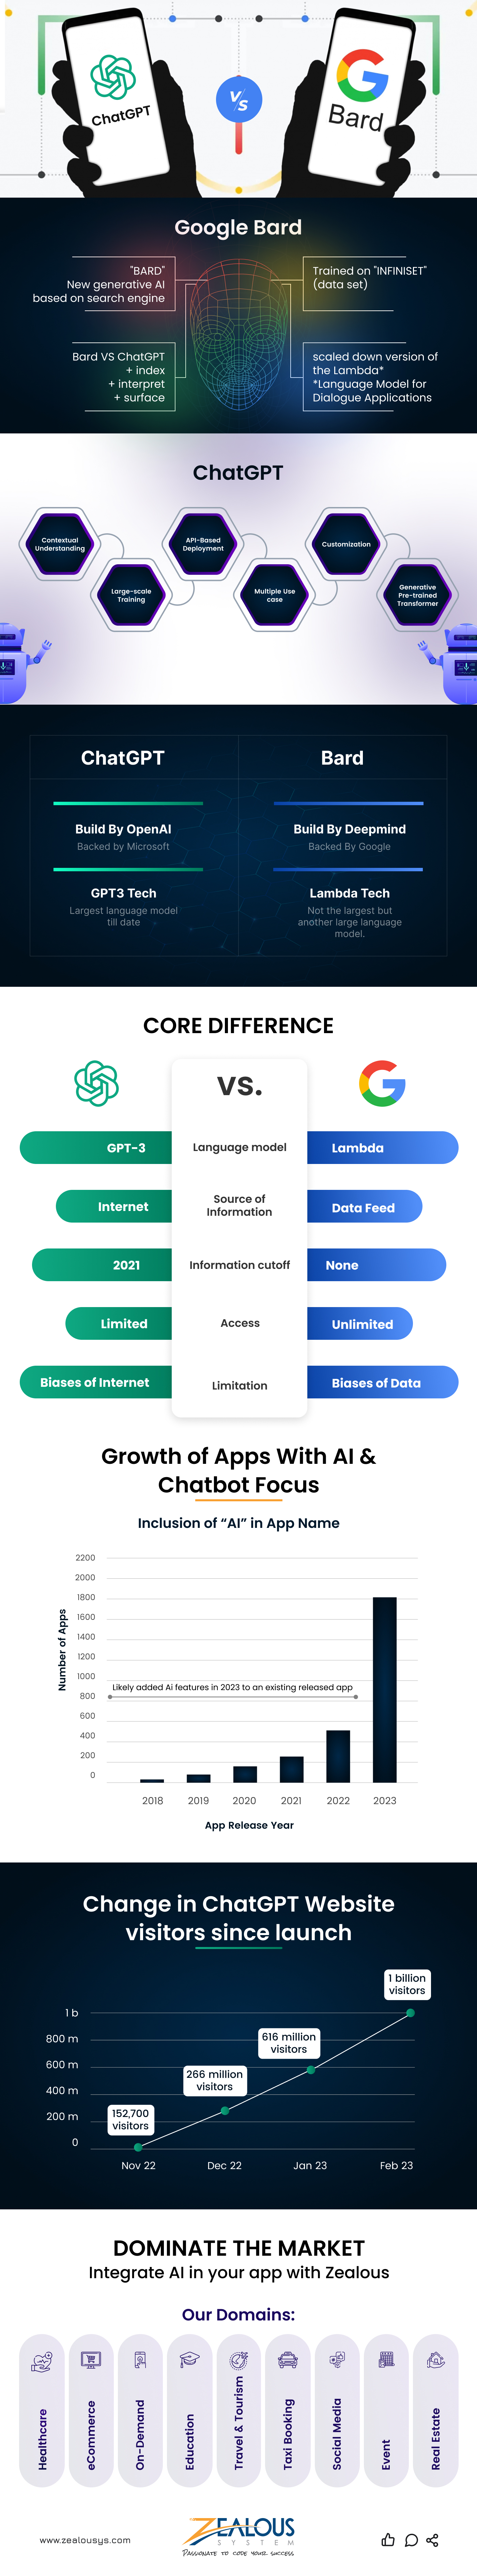 google-bard-vs-chatgpt-infographic